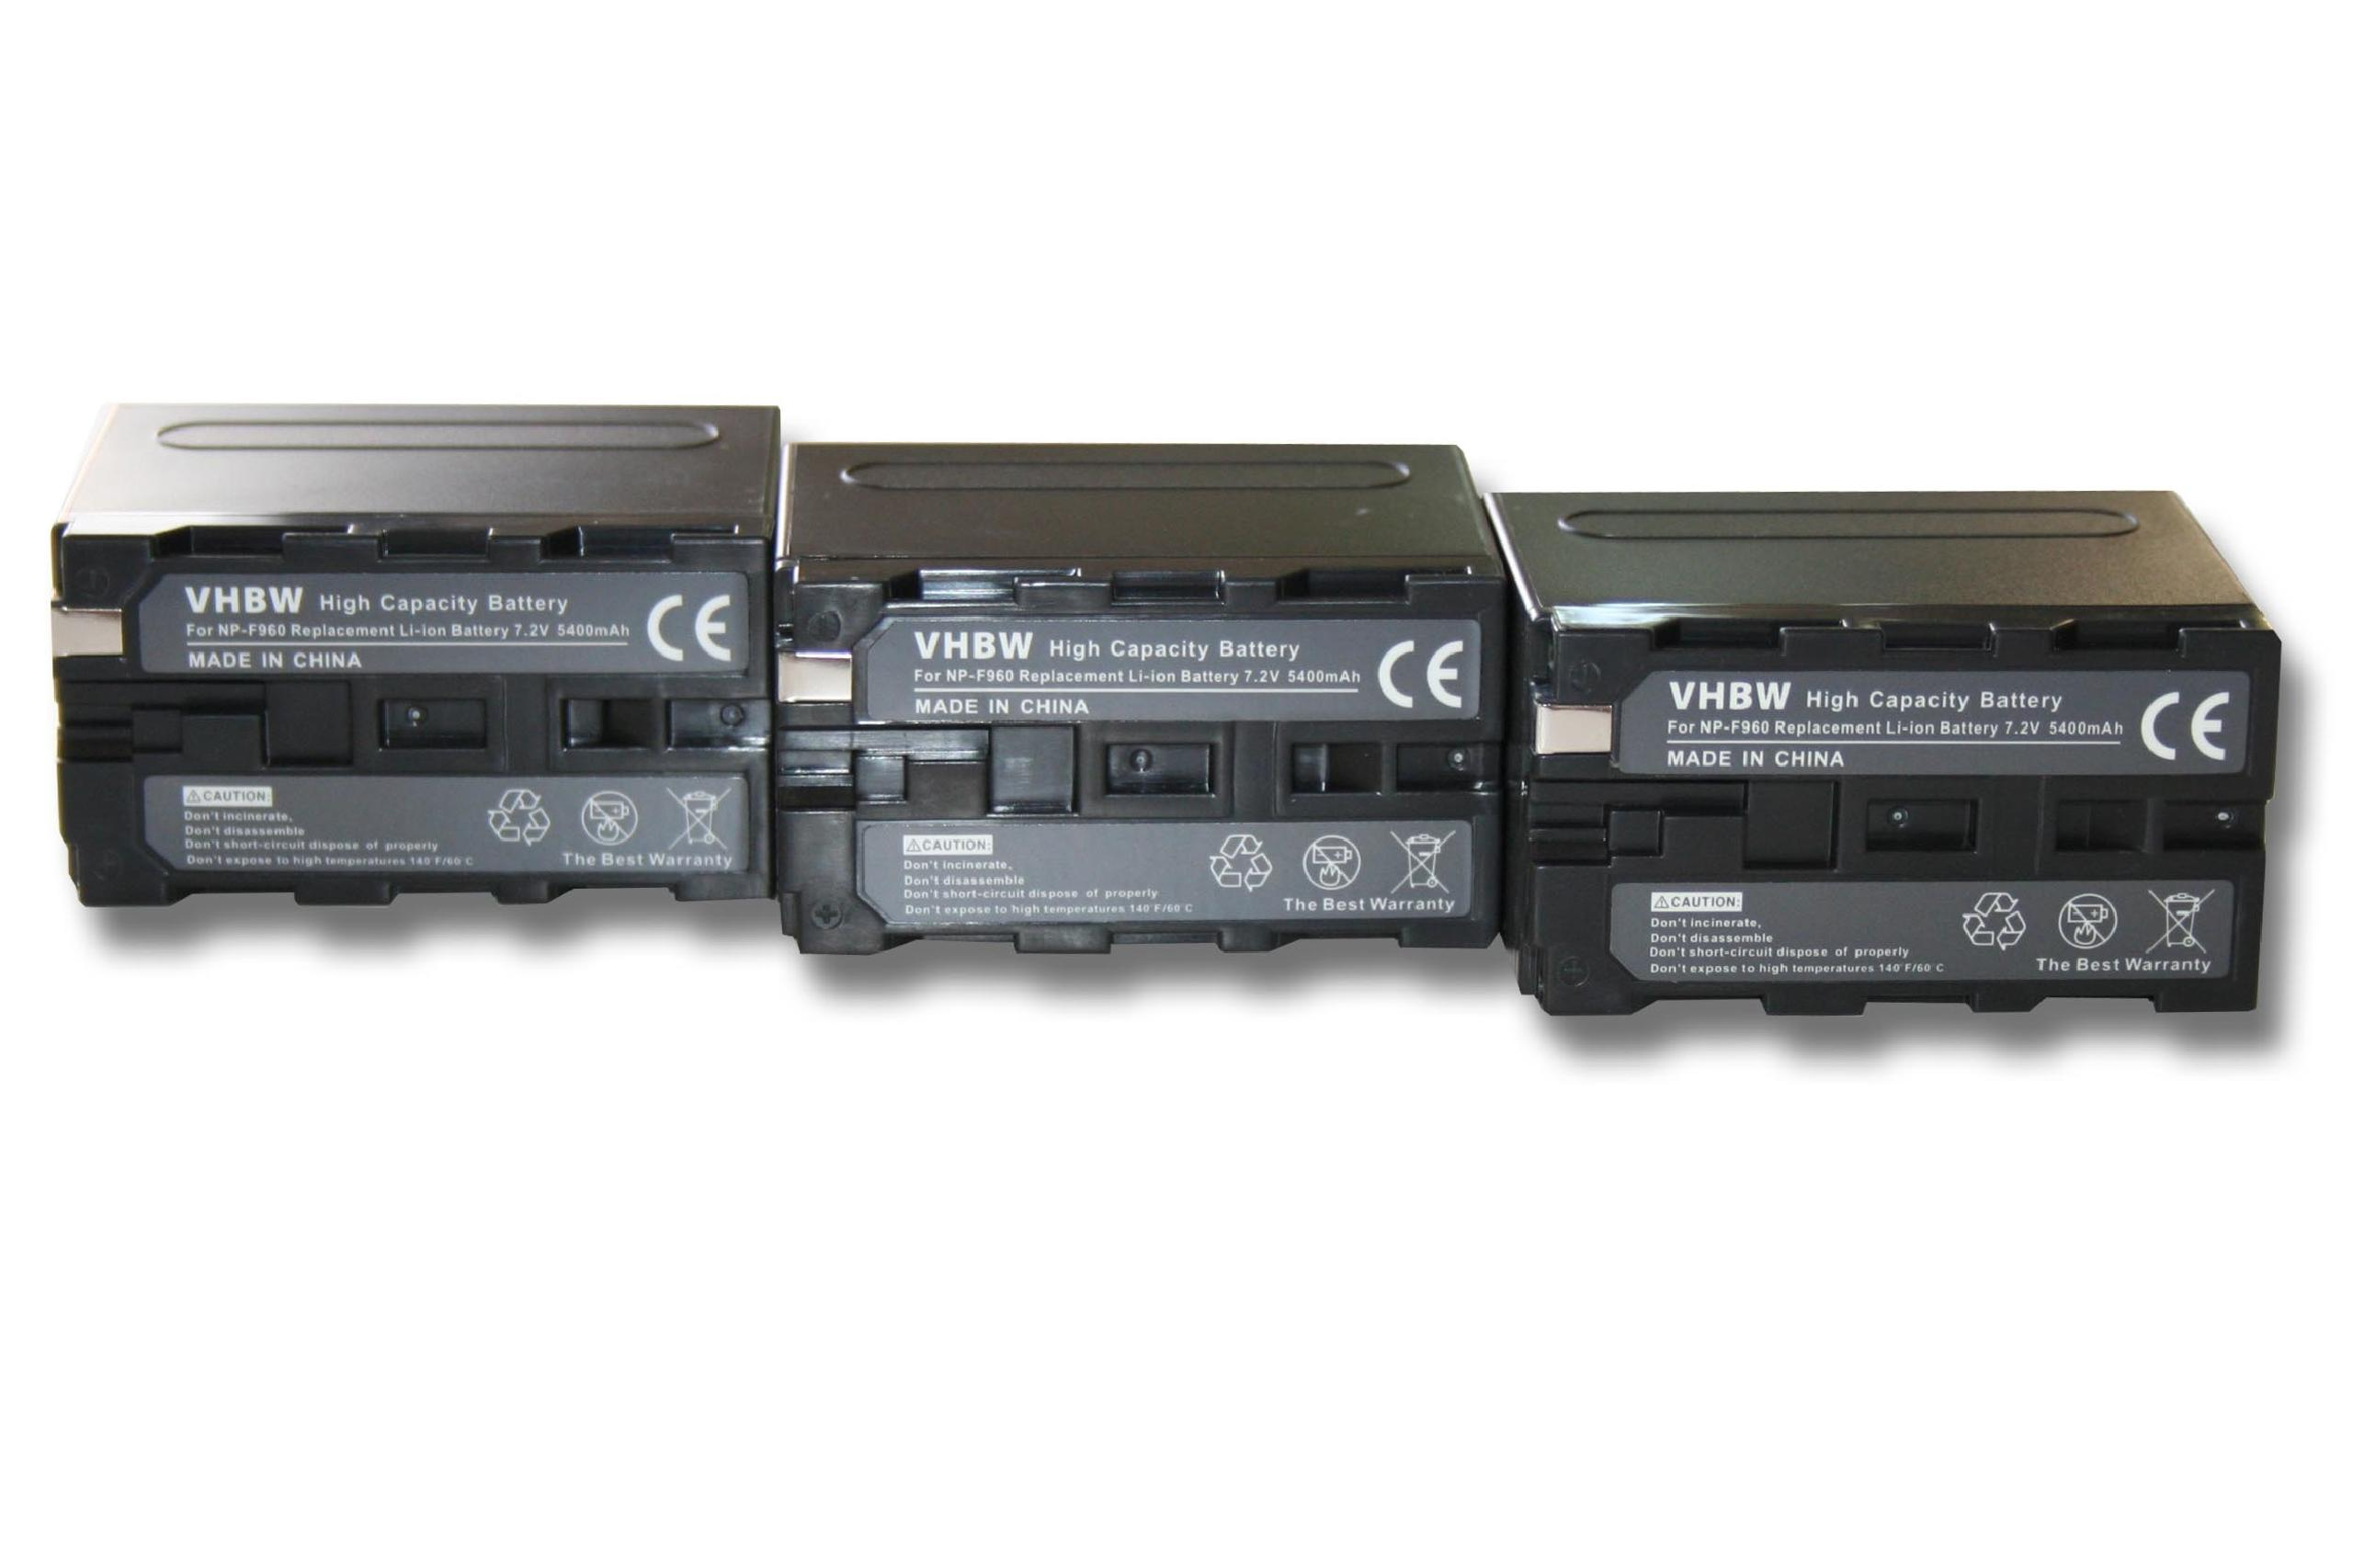 VHBW kompatibel mit Volt, - DCR-TRV7, DCR-TRV720, DCR-TRV525 7.2 Li-Ion DCR-TRV510, DCR-TRV520, Akku Sony 6000 Videokamera, DCR-TRV820E